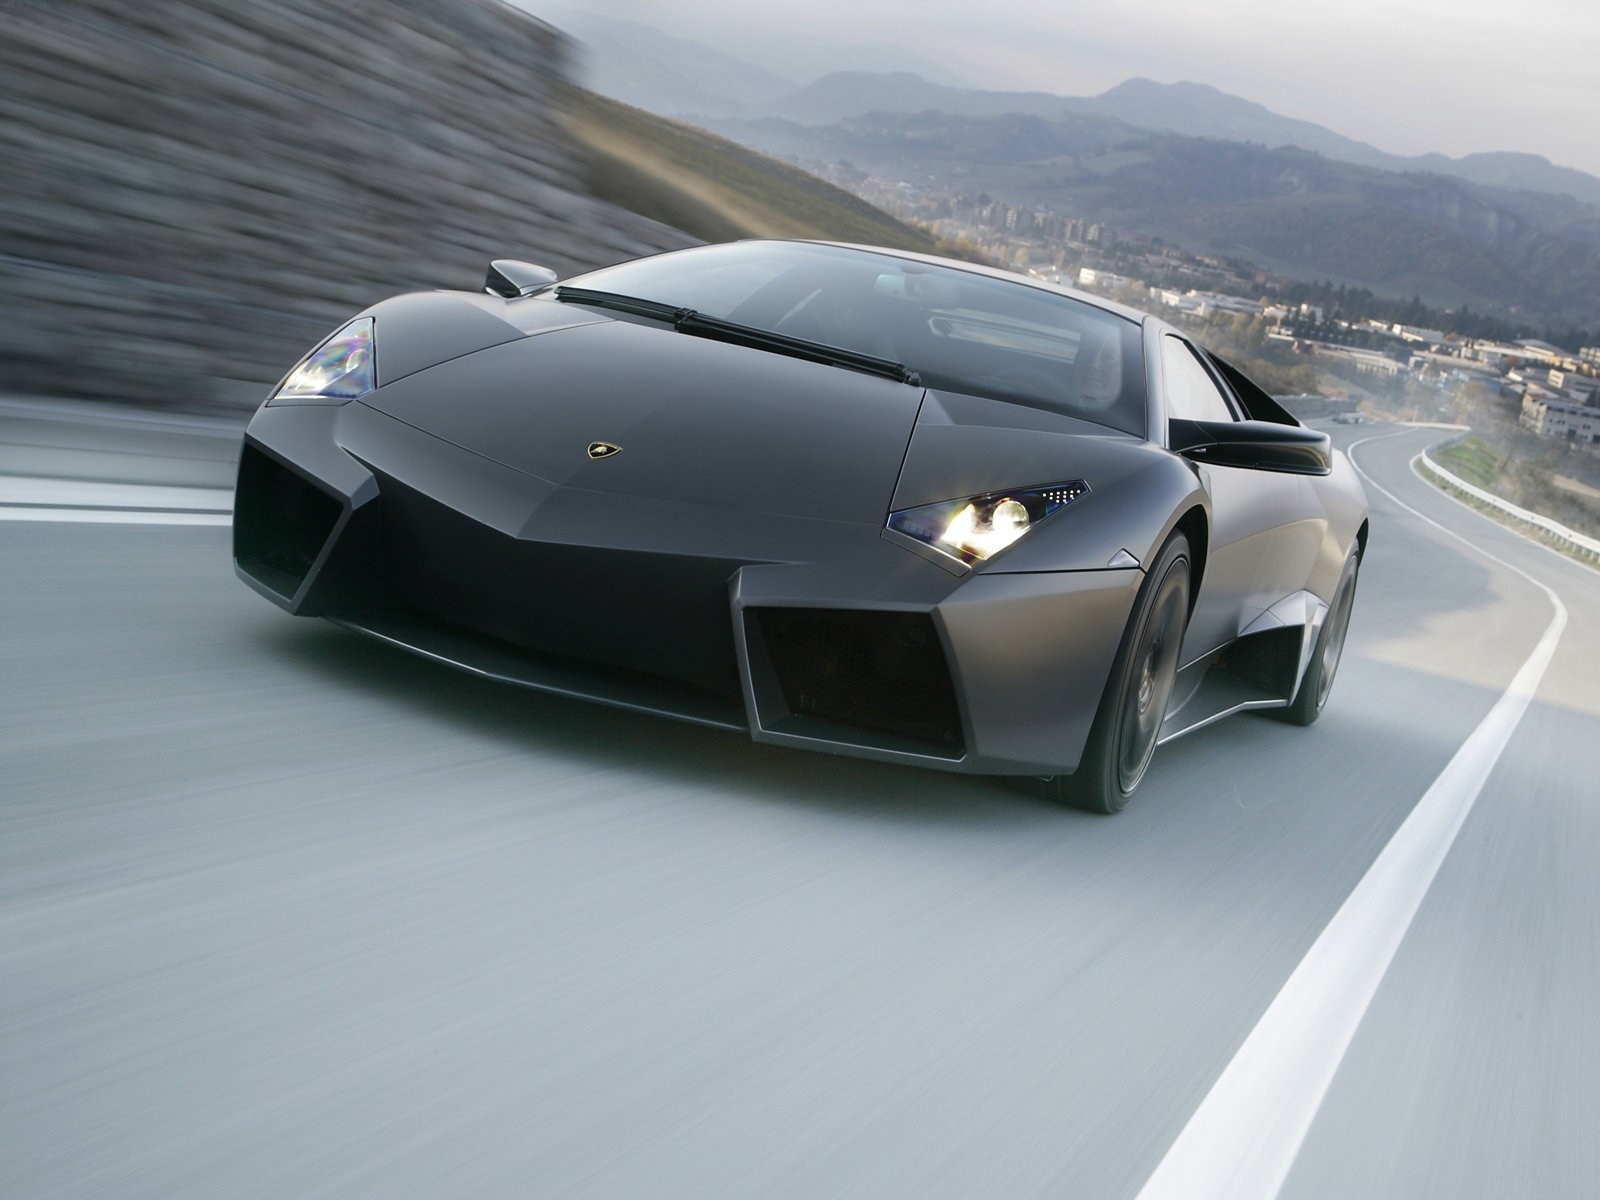 10793 Заставки и Обои Ламборджини (Lamborghini) на телефон. Скачать машины, транспорт картинки бесплатно